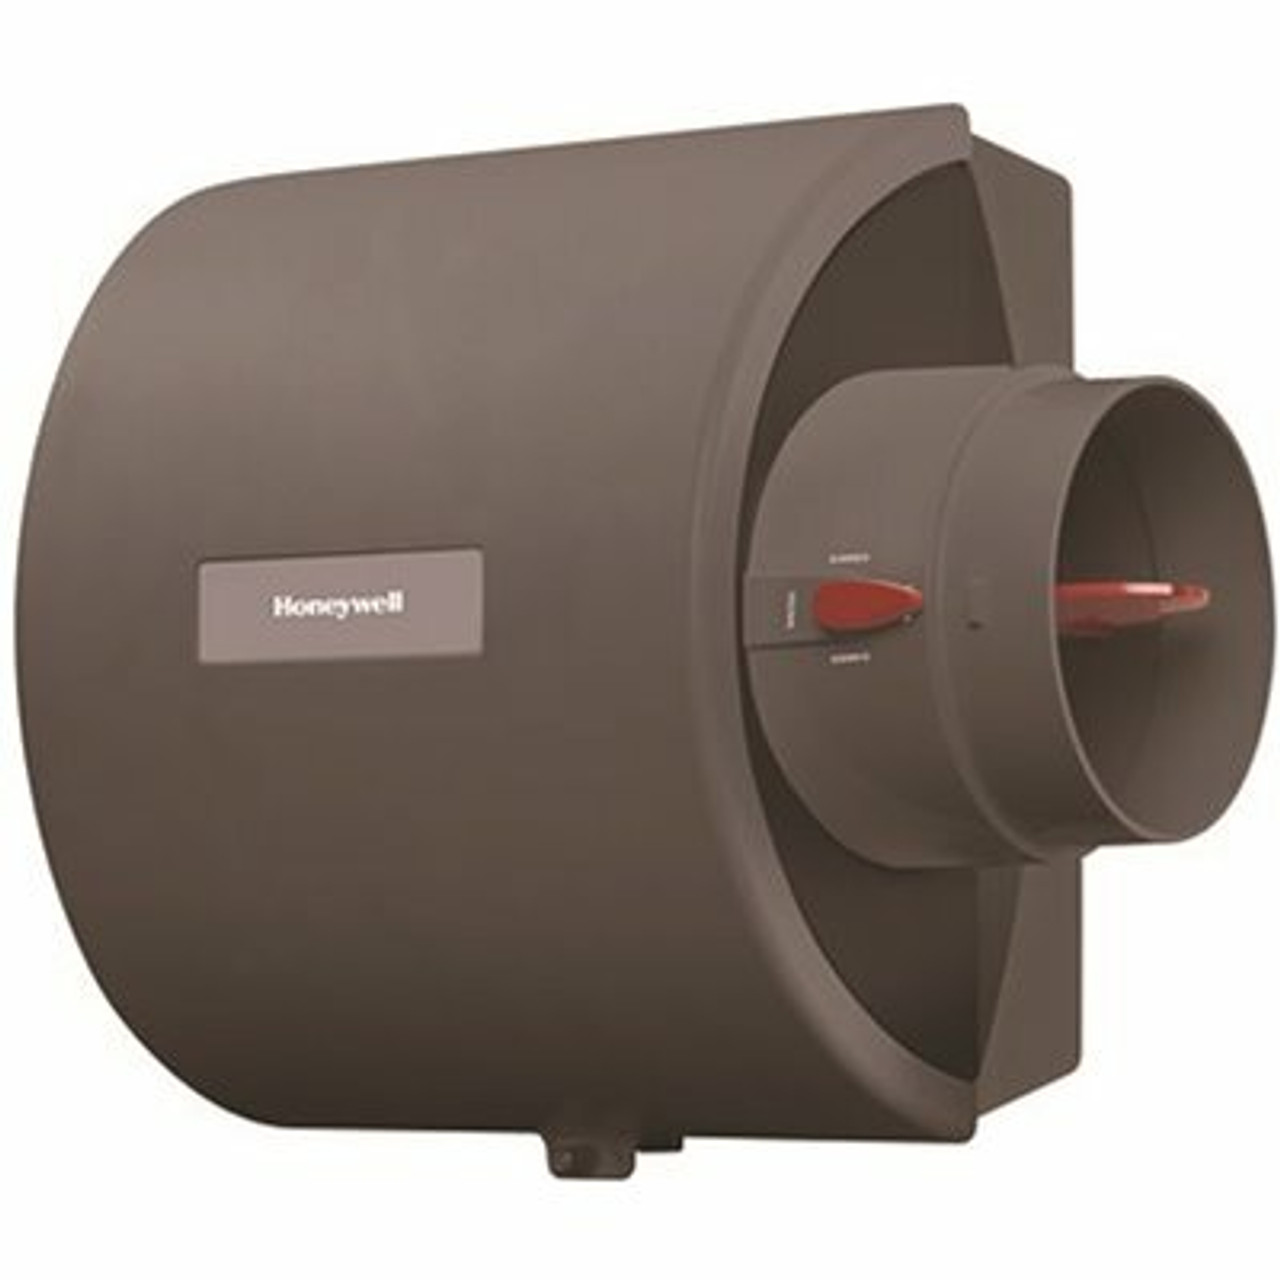 Honeywell Whole-House Small 12 Gpd Standard Bypass Humidifier